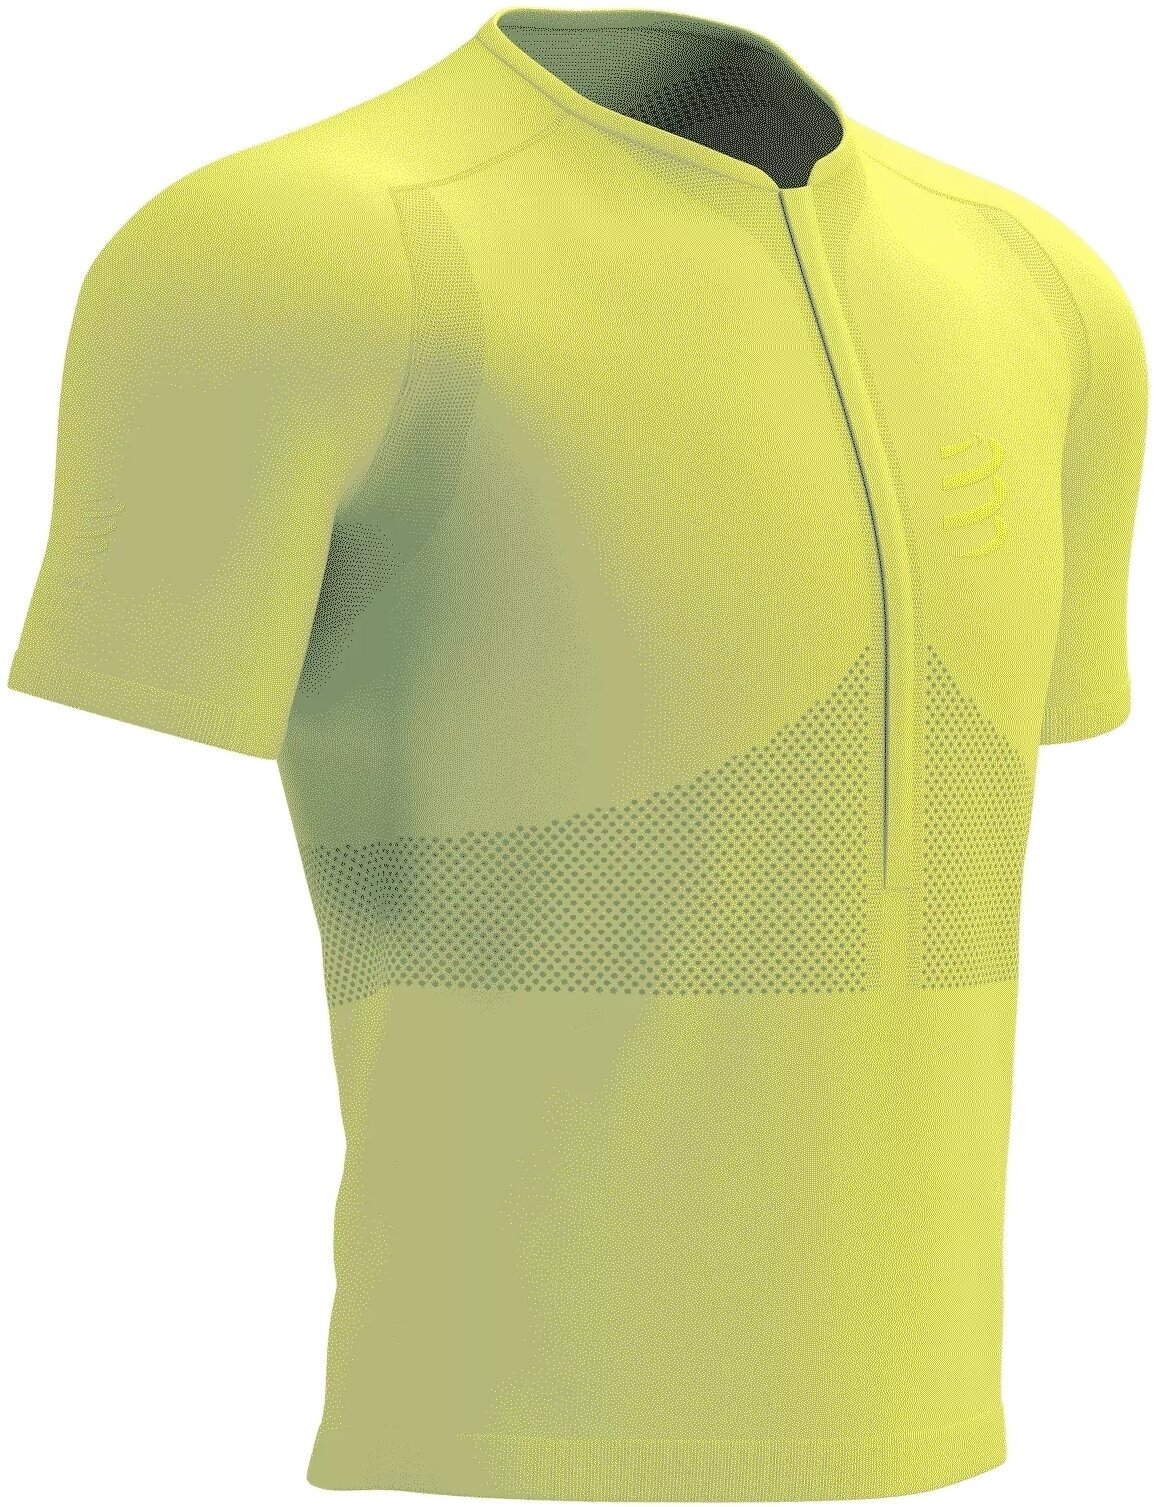 Laufshirt mit Kurzarm
 Compressport Trail Half-Zip Fitted SS Top Green Sheen/Safety Yellow L Laufshirt mit Kurzarm